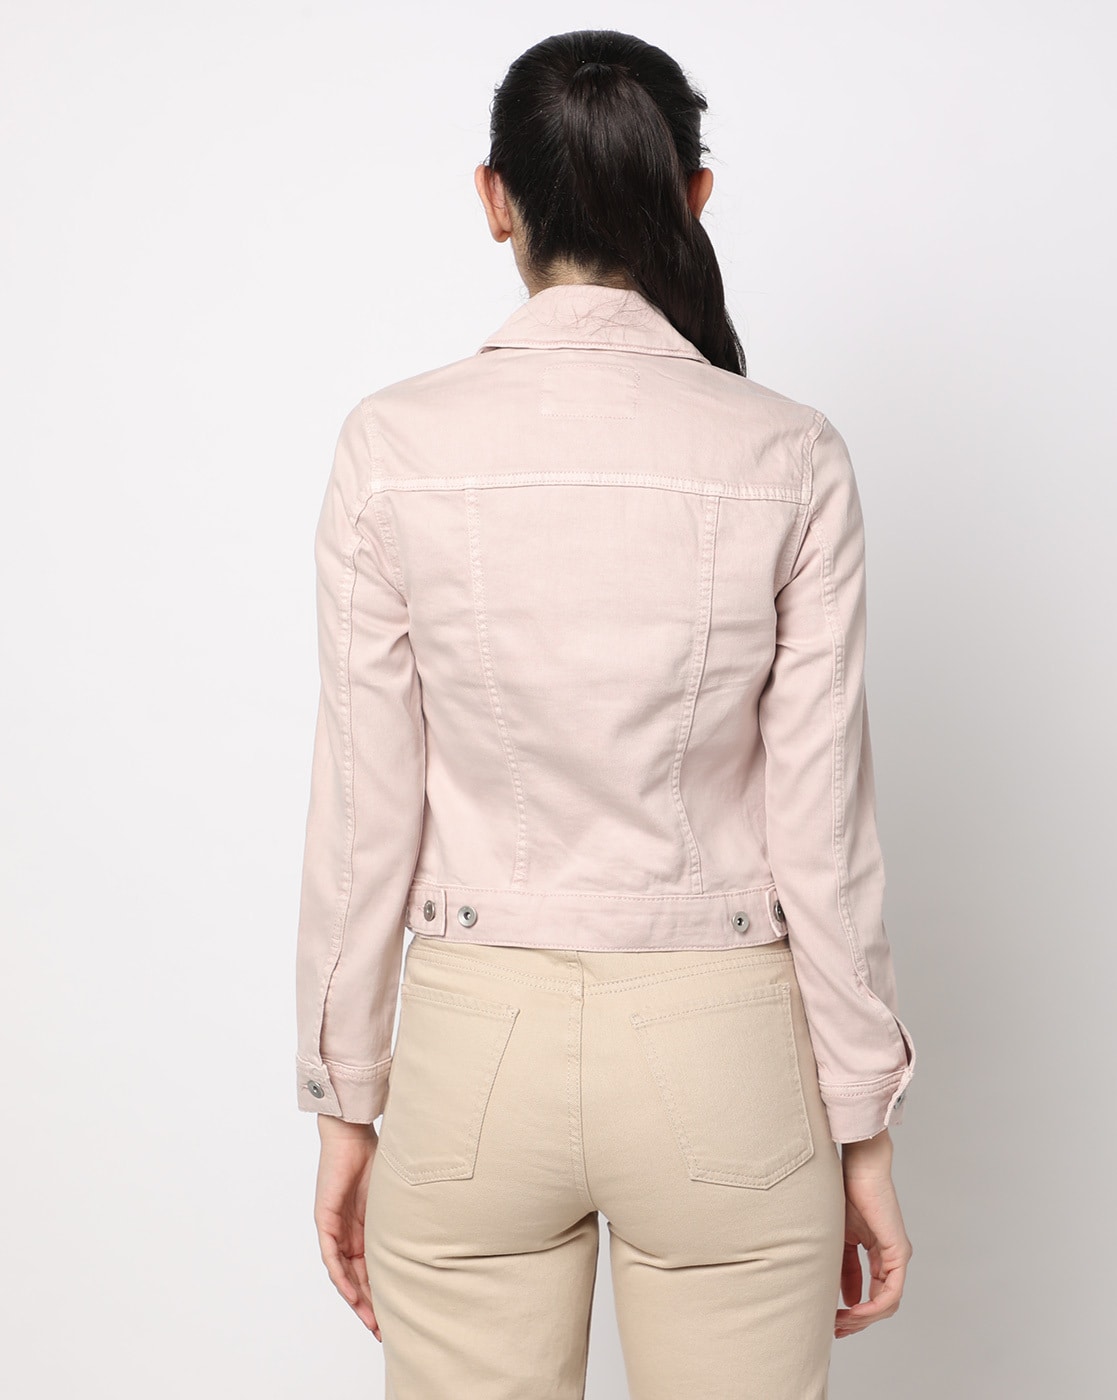 Full Sleeve Peach Ladies Stylish Denim Jacket, Size: Medium